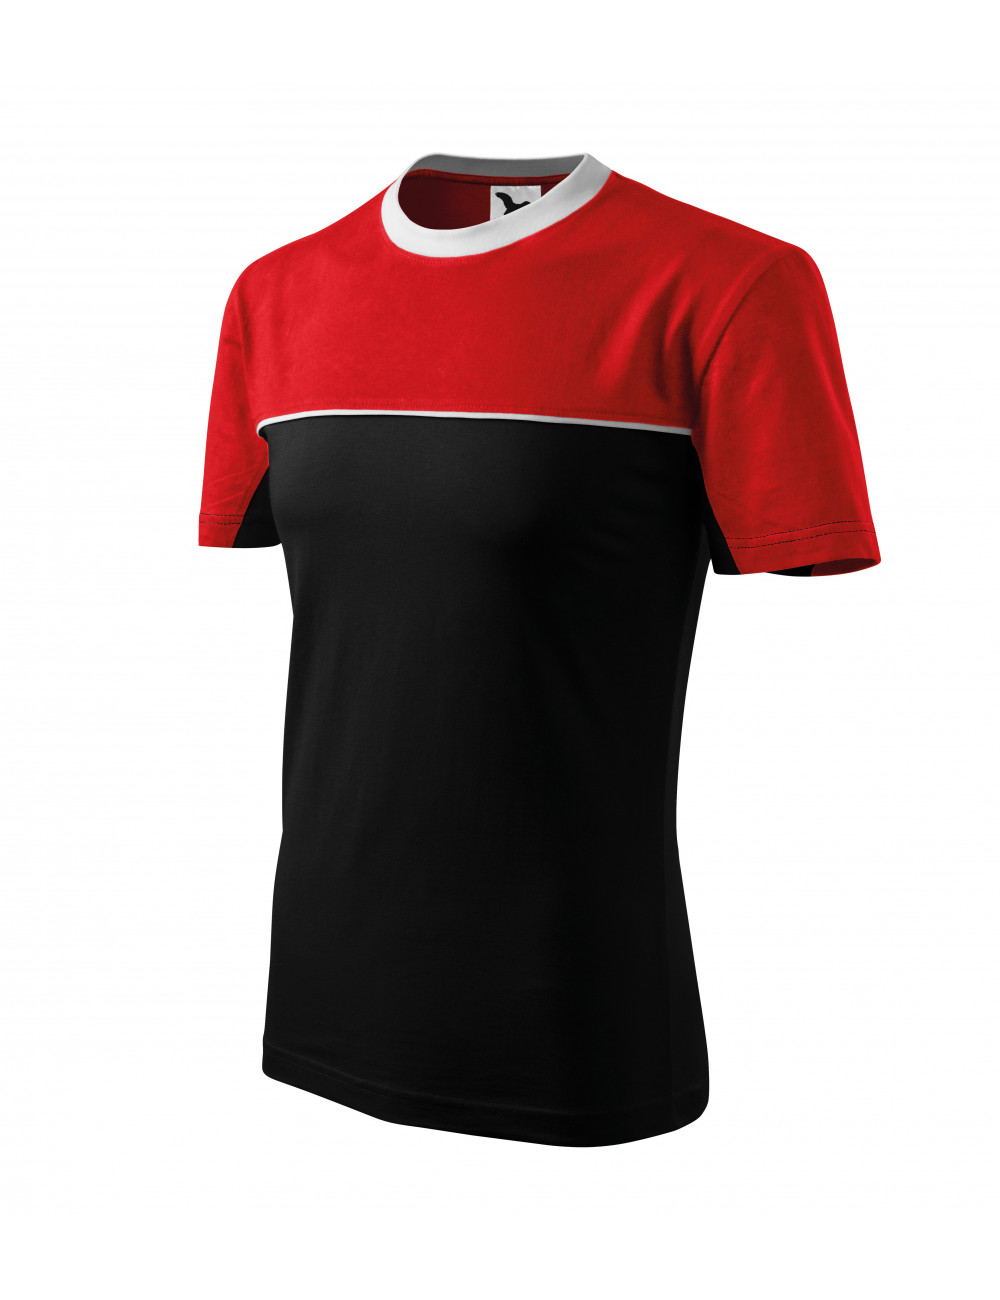 Unisex T-Shirt Colormix 109 schwarz Adler Malfini